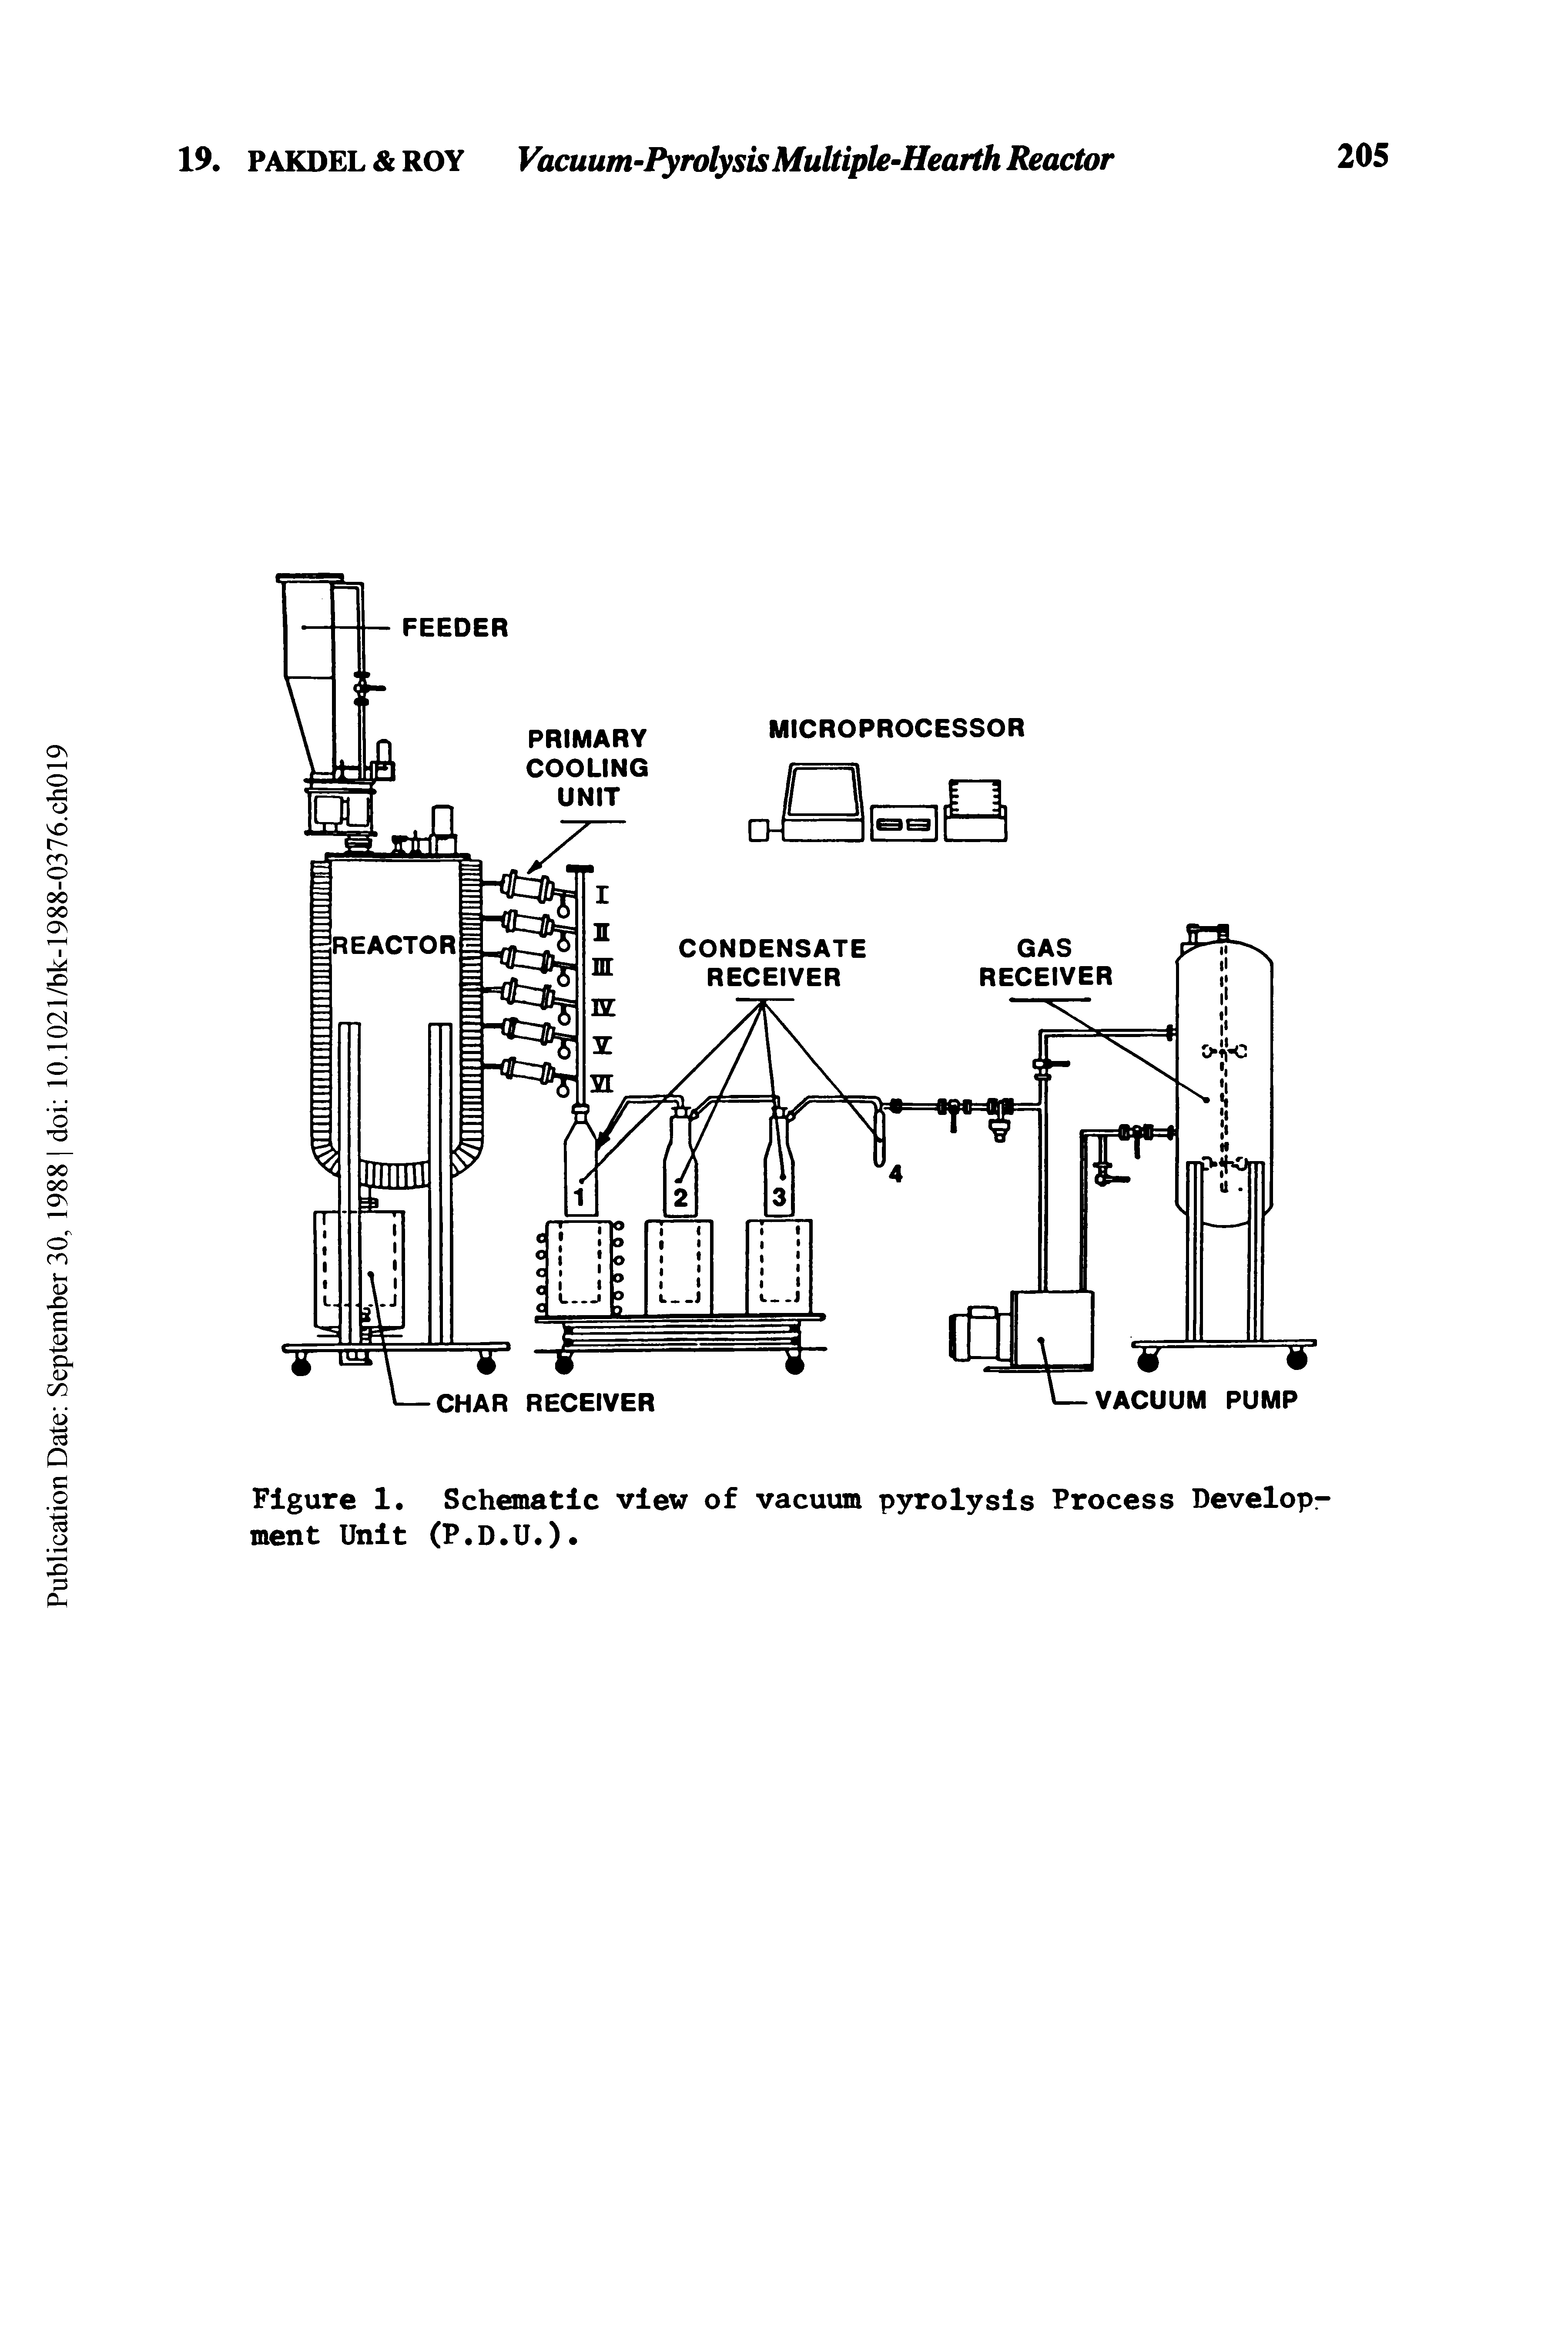 Figure 1. Schematic view of vacuum pyrolysis Process Development Unit (P.D.U.).